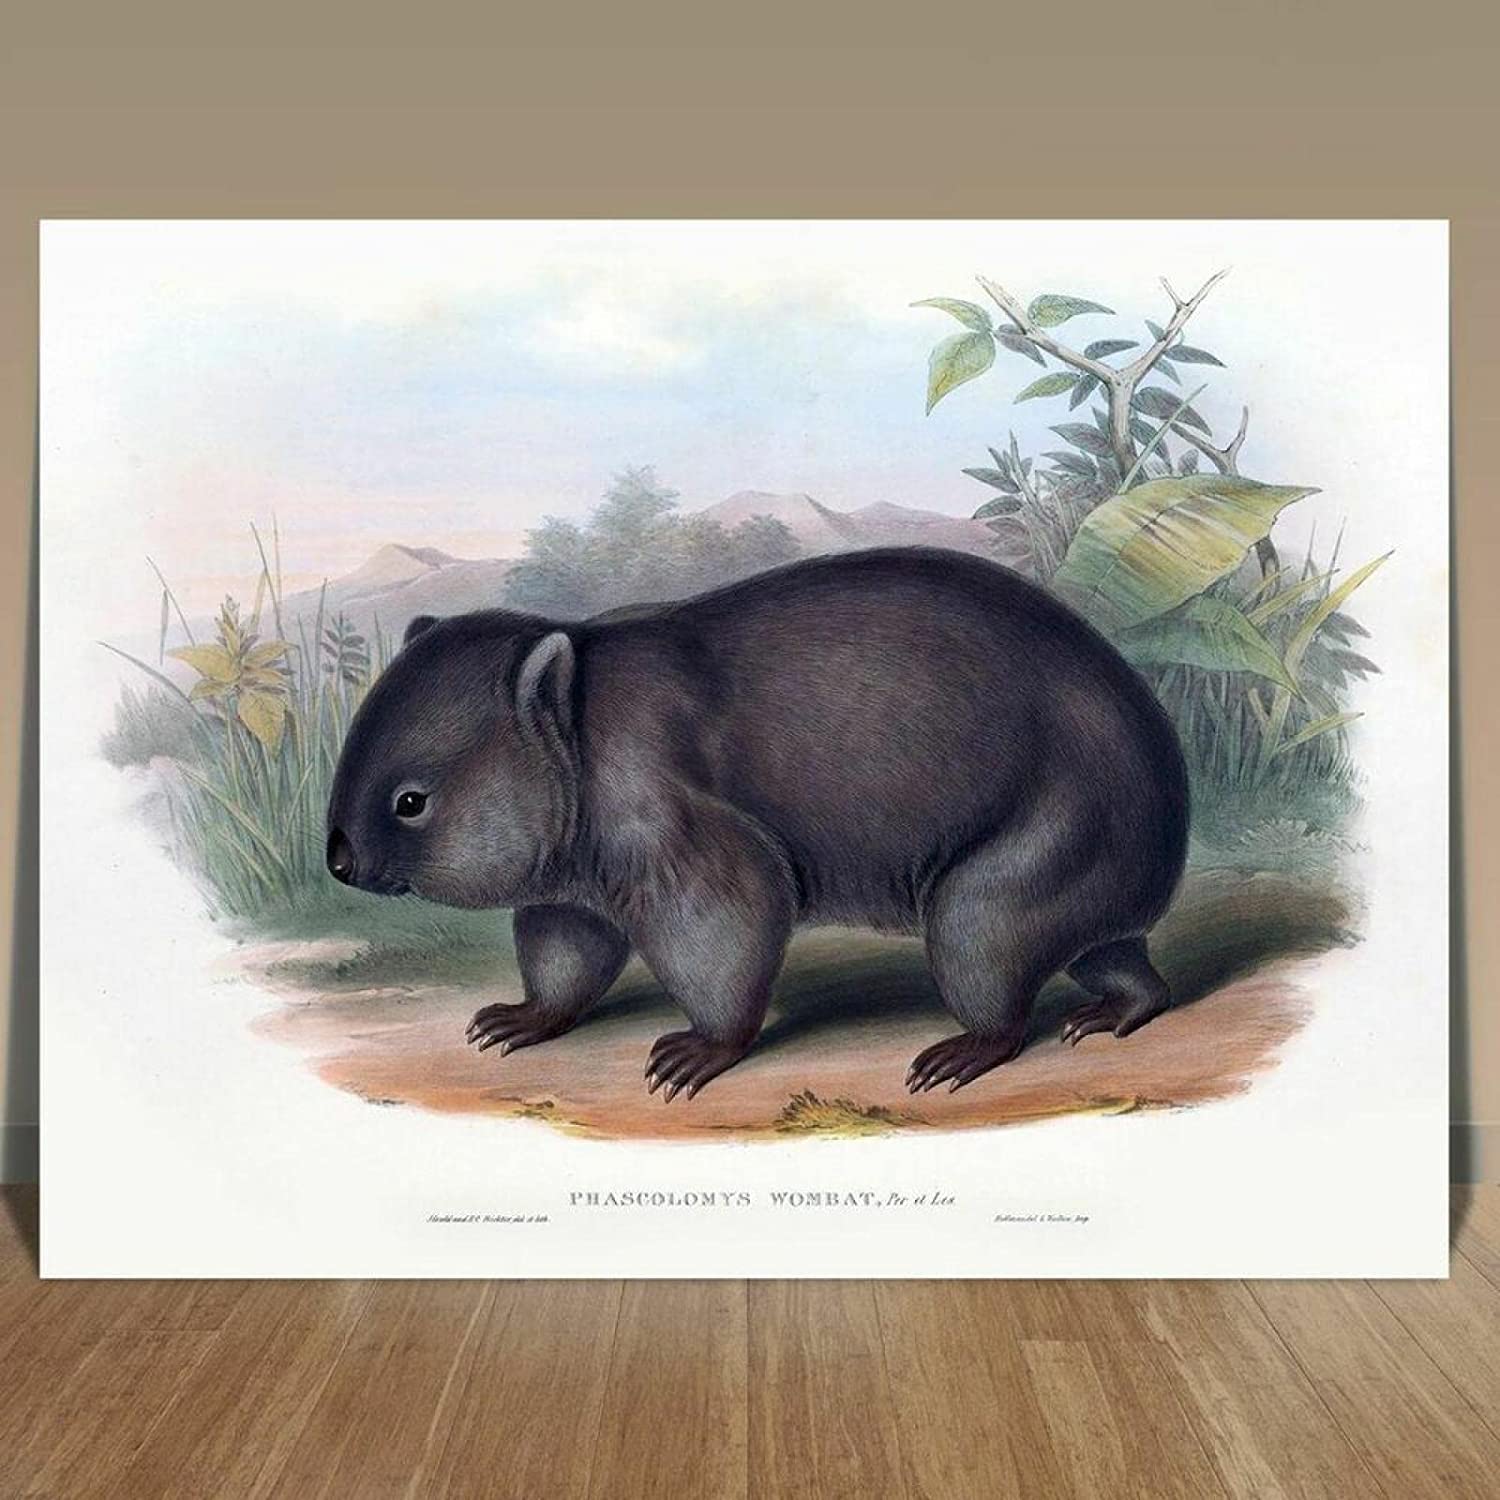 Wandbild 50 x 70 cm Rahmenlos John Goulds Tier Vogel Illustration Wombat Malerei Leinwand Wandbild Bild Wohnzimmer Dekor